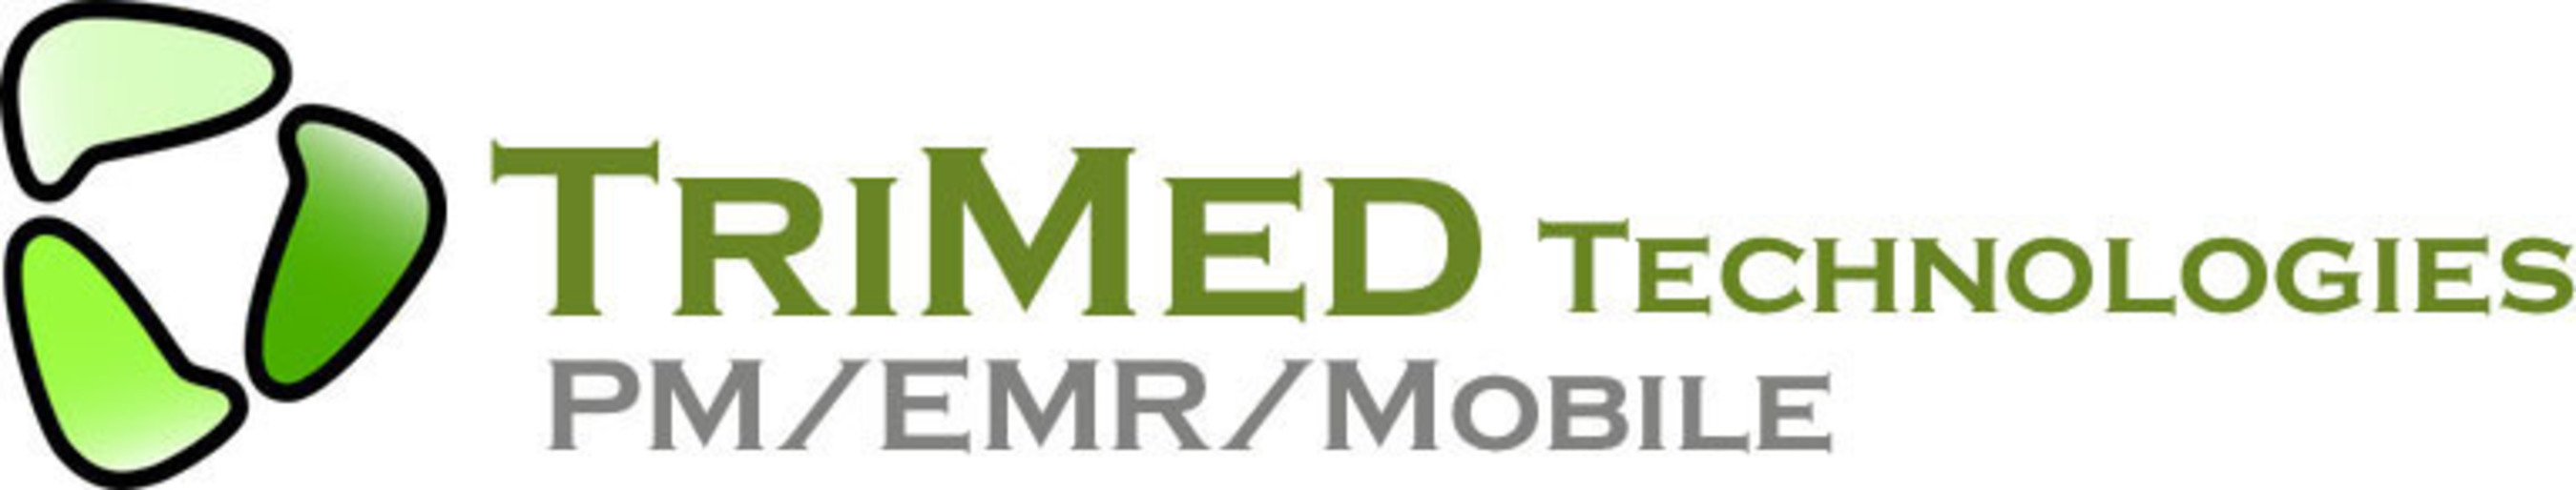 TriMed Technologies Logo. (PRNewsFoto/TriMed Technologies) (PRNewsFoto/TRIMED TECHNOLOGIES)